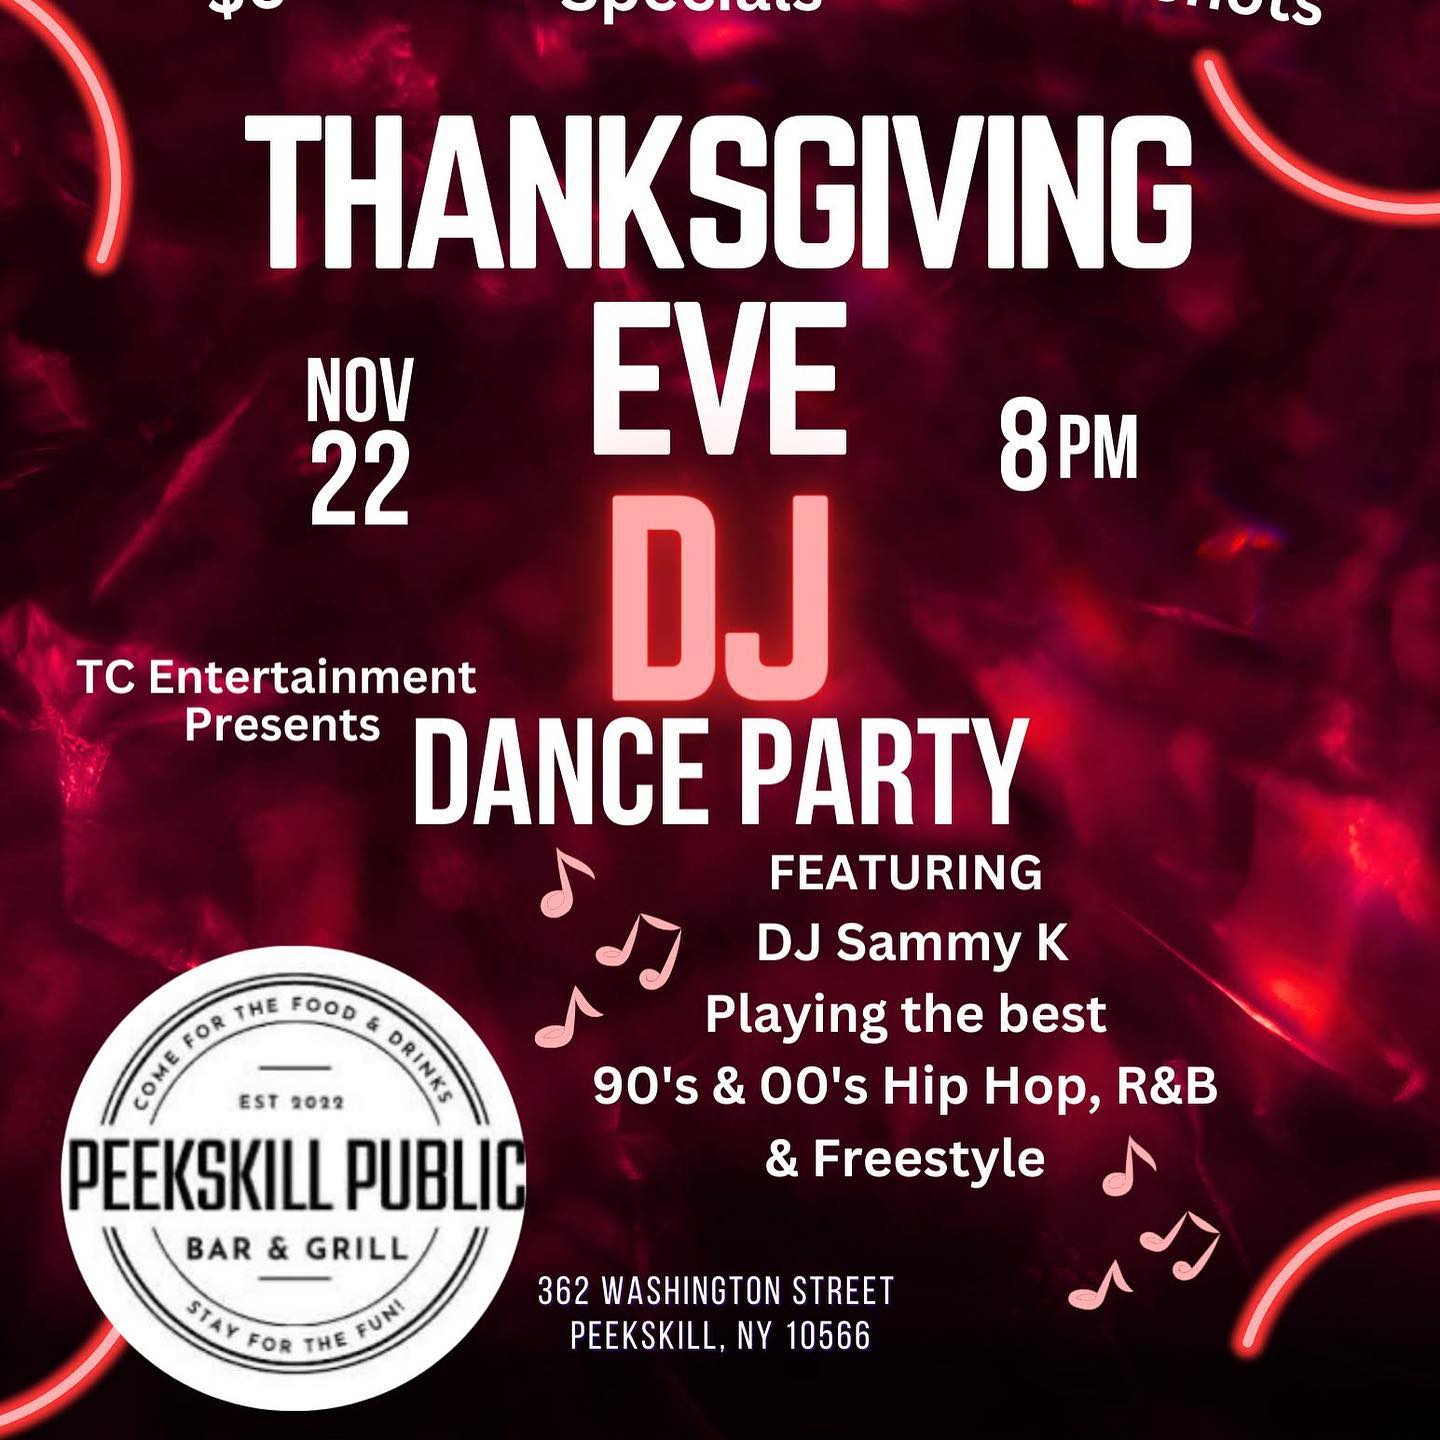 Flier for Peekskill Public Thanksgiving Eve DJ Dance Party